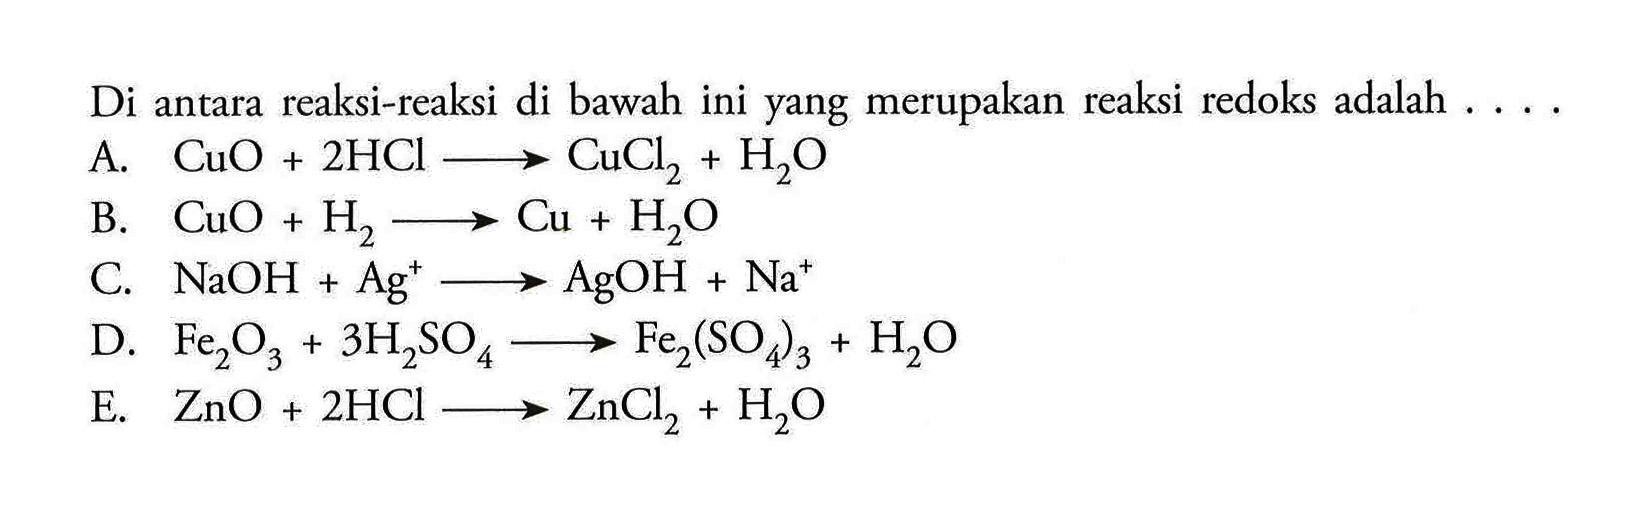 Di antara reaksi-reaksi di bawah ini yang merupakan reaksi redoks adalah  ....A.  CuO+2HCl -> CuCl2+H2O B.  CuO+H2 -> Cu+H2O C.  NaOH+Ag^+ -> AgOH+Na^+ D.  Fe2O3+3H2SO4 -> Fe2(SO4)3+H2OE.  ZnO+2HCl -> ZnCl2+H2O